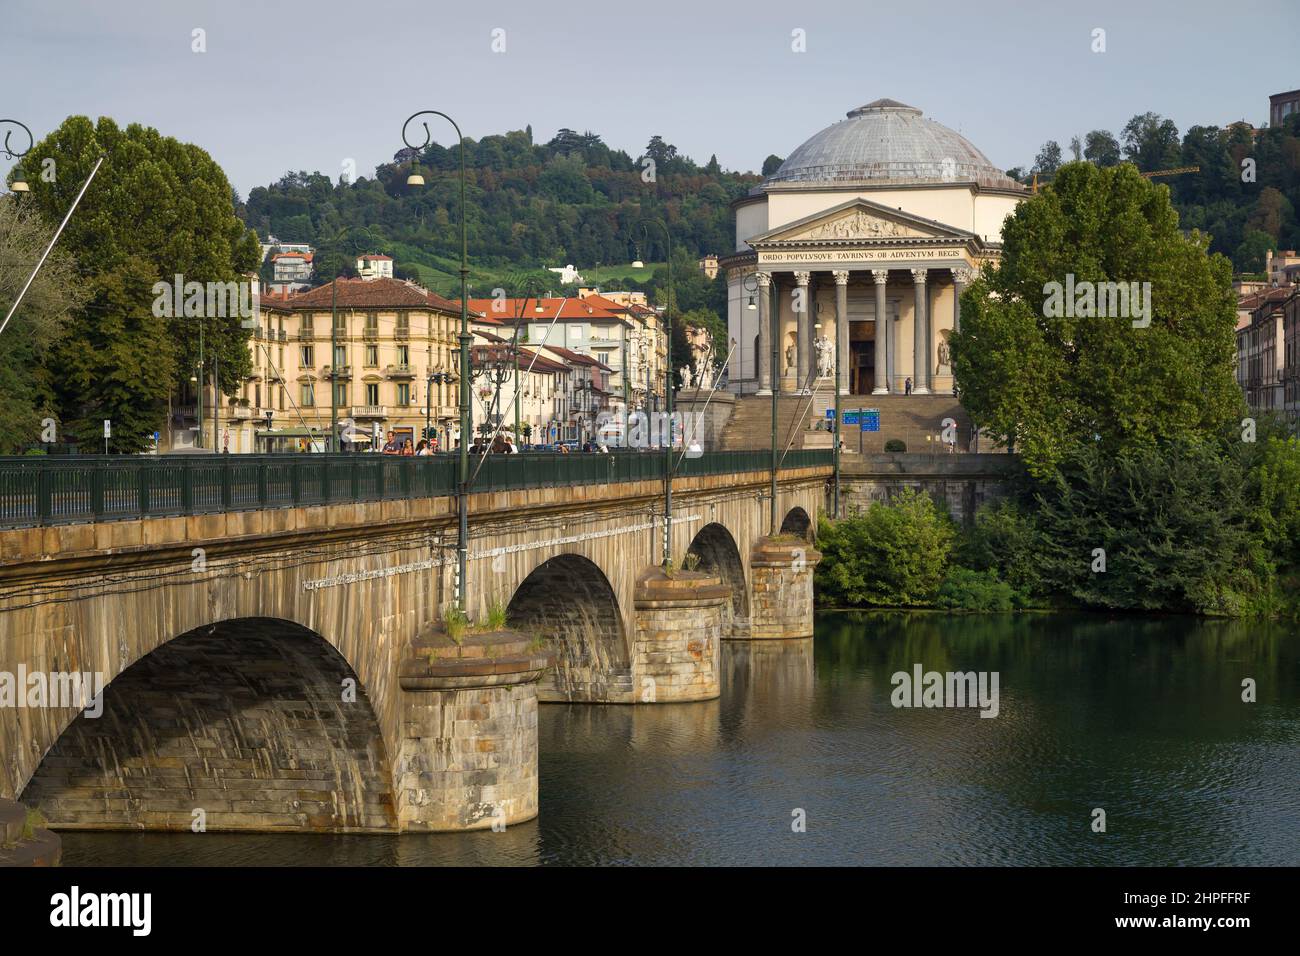 Turin, Italie - 13 août 2021 : pont Vittorio Emanuele I et église Gran Madre di Dio à Turin, Italie. Banque D'Images